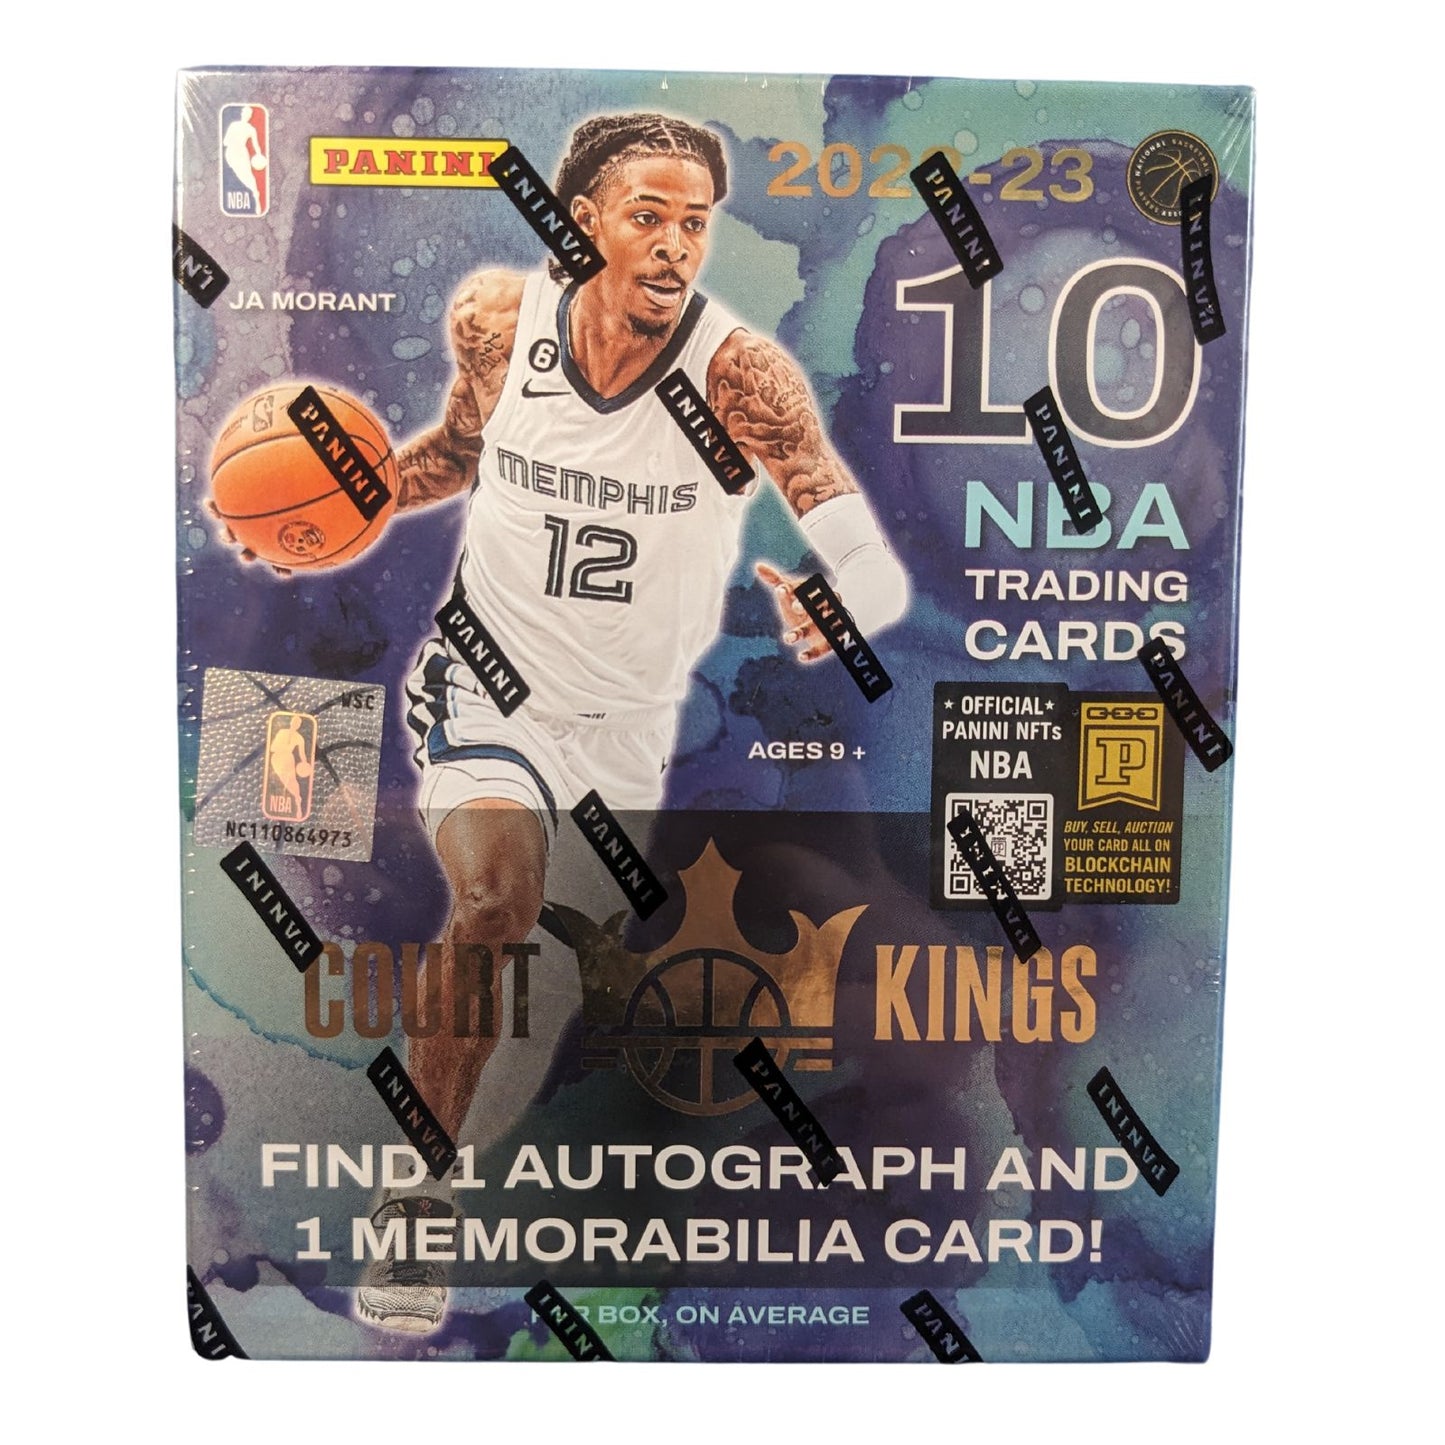 2022-23 Panini Court Kings Basketball Hobby Box